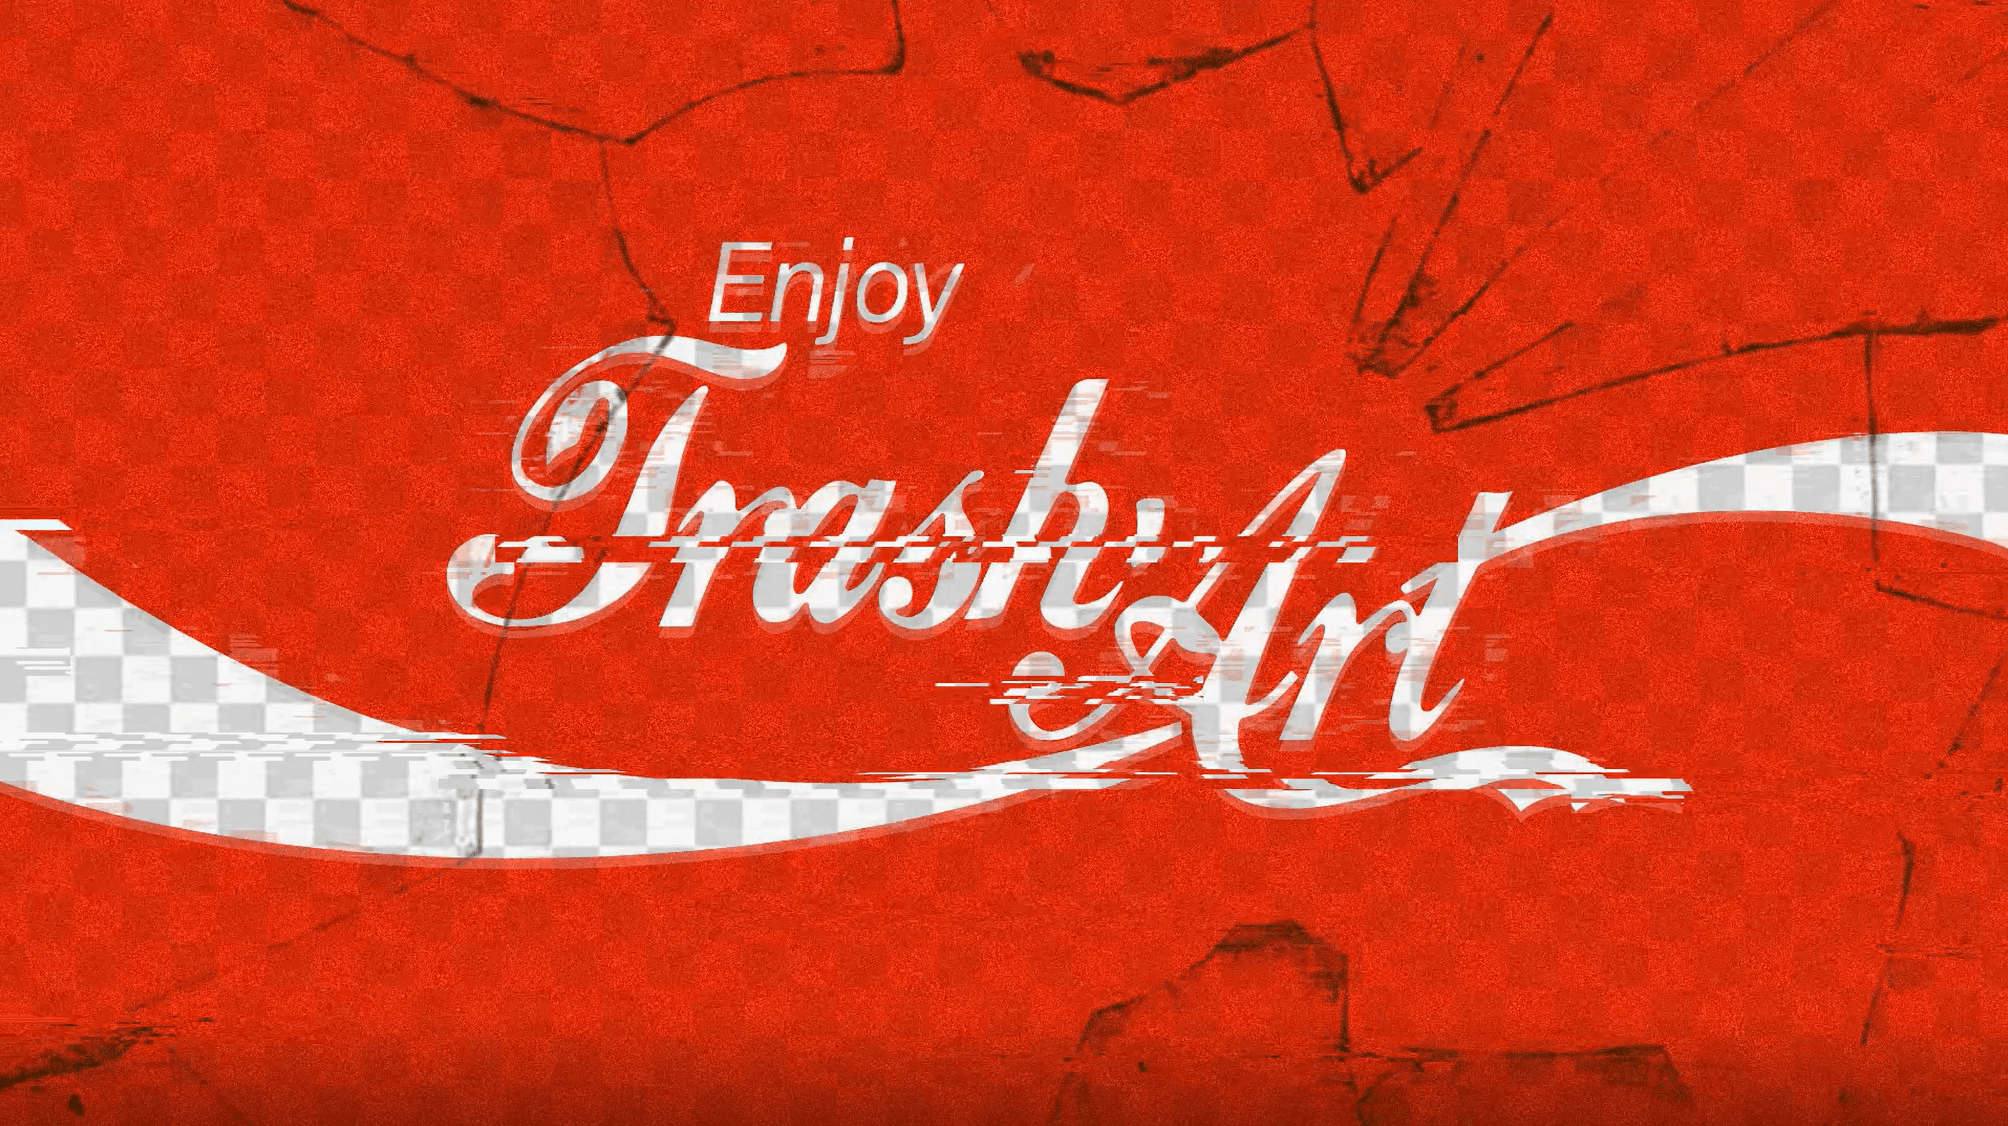 Enjoy TRASHART #2/10